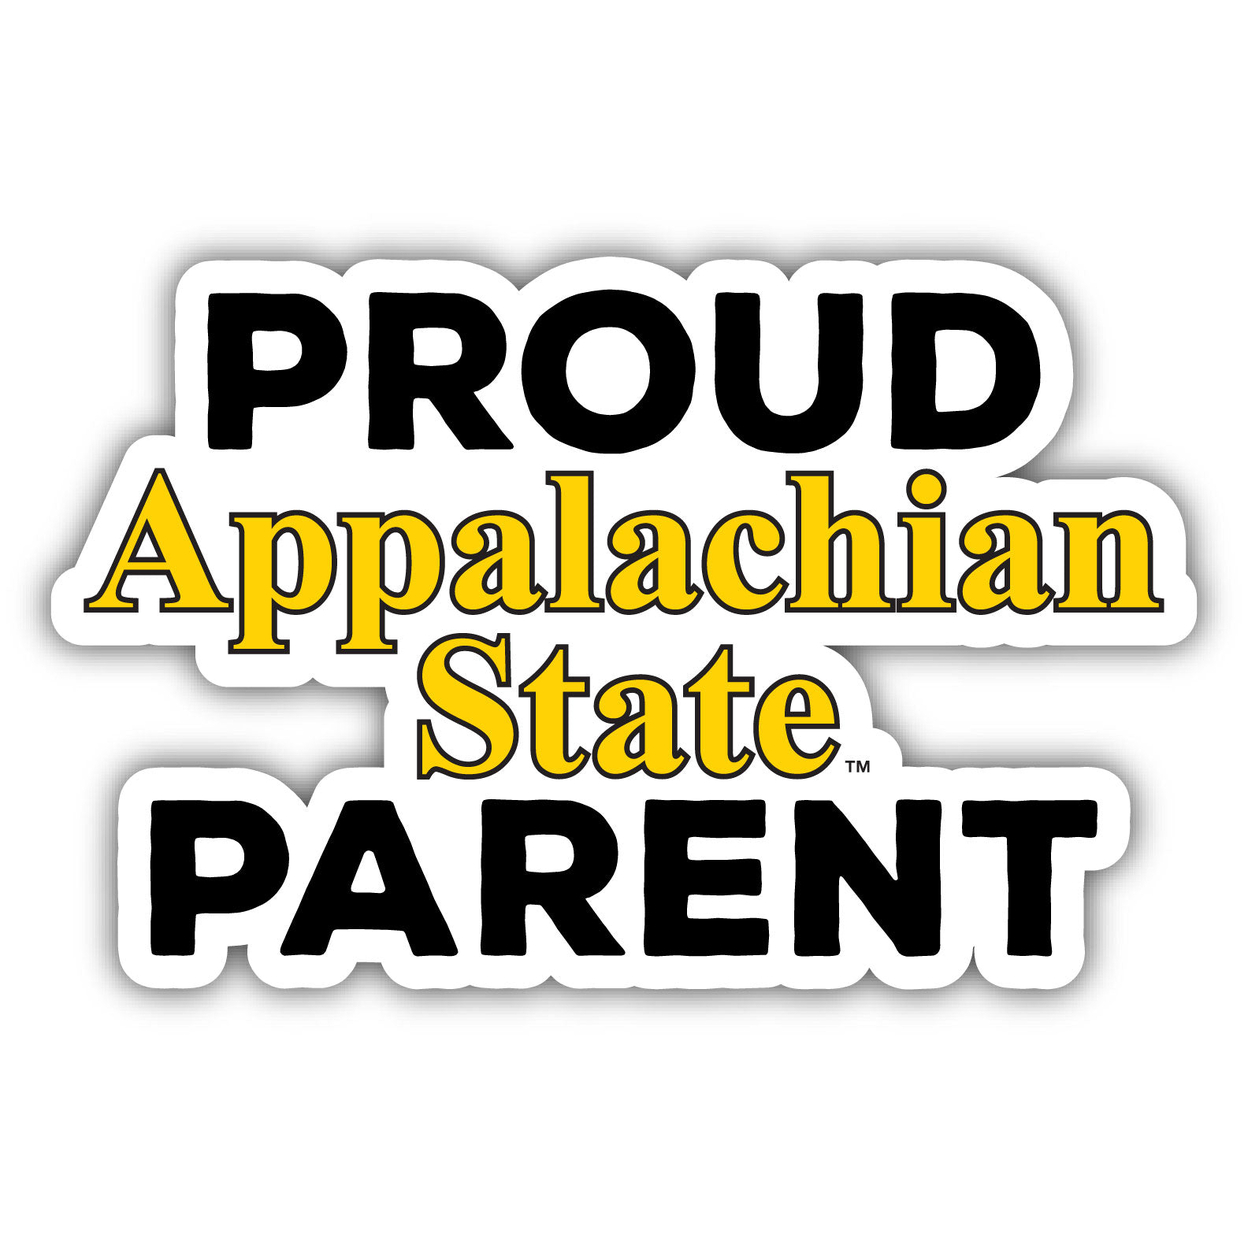 Appalachian State Proud Parent 4 Sticker - (4 Pack)